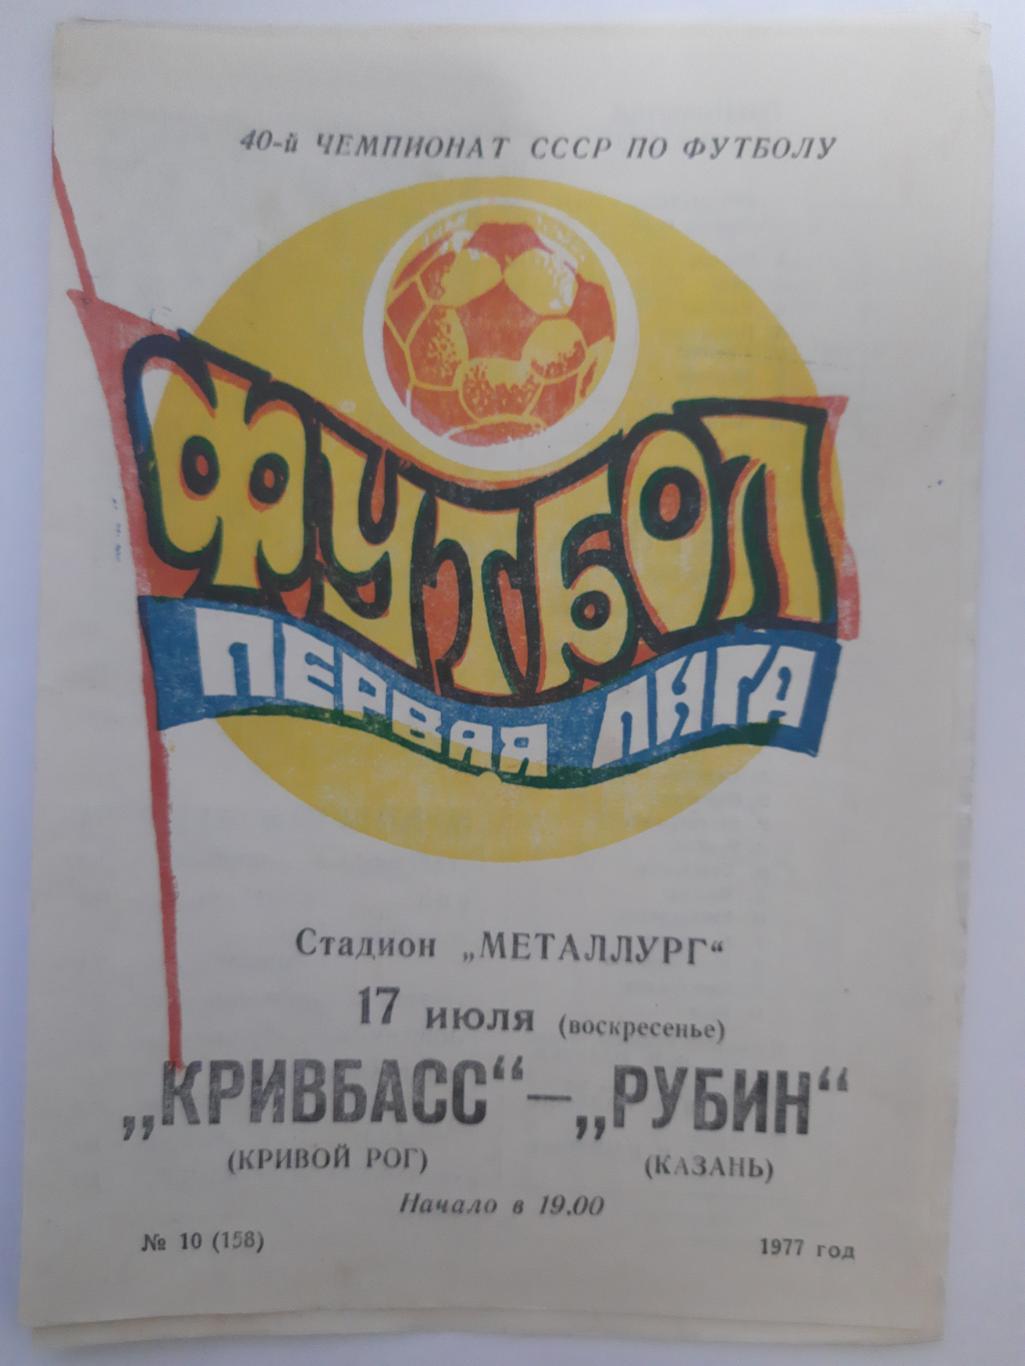 Кривбасс Кривой Рог - Рубин Казань 17.07.1977